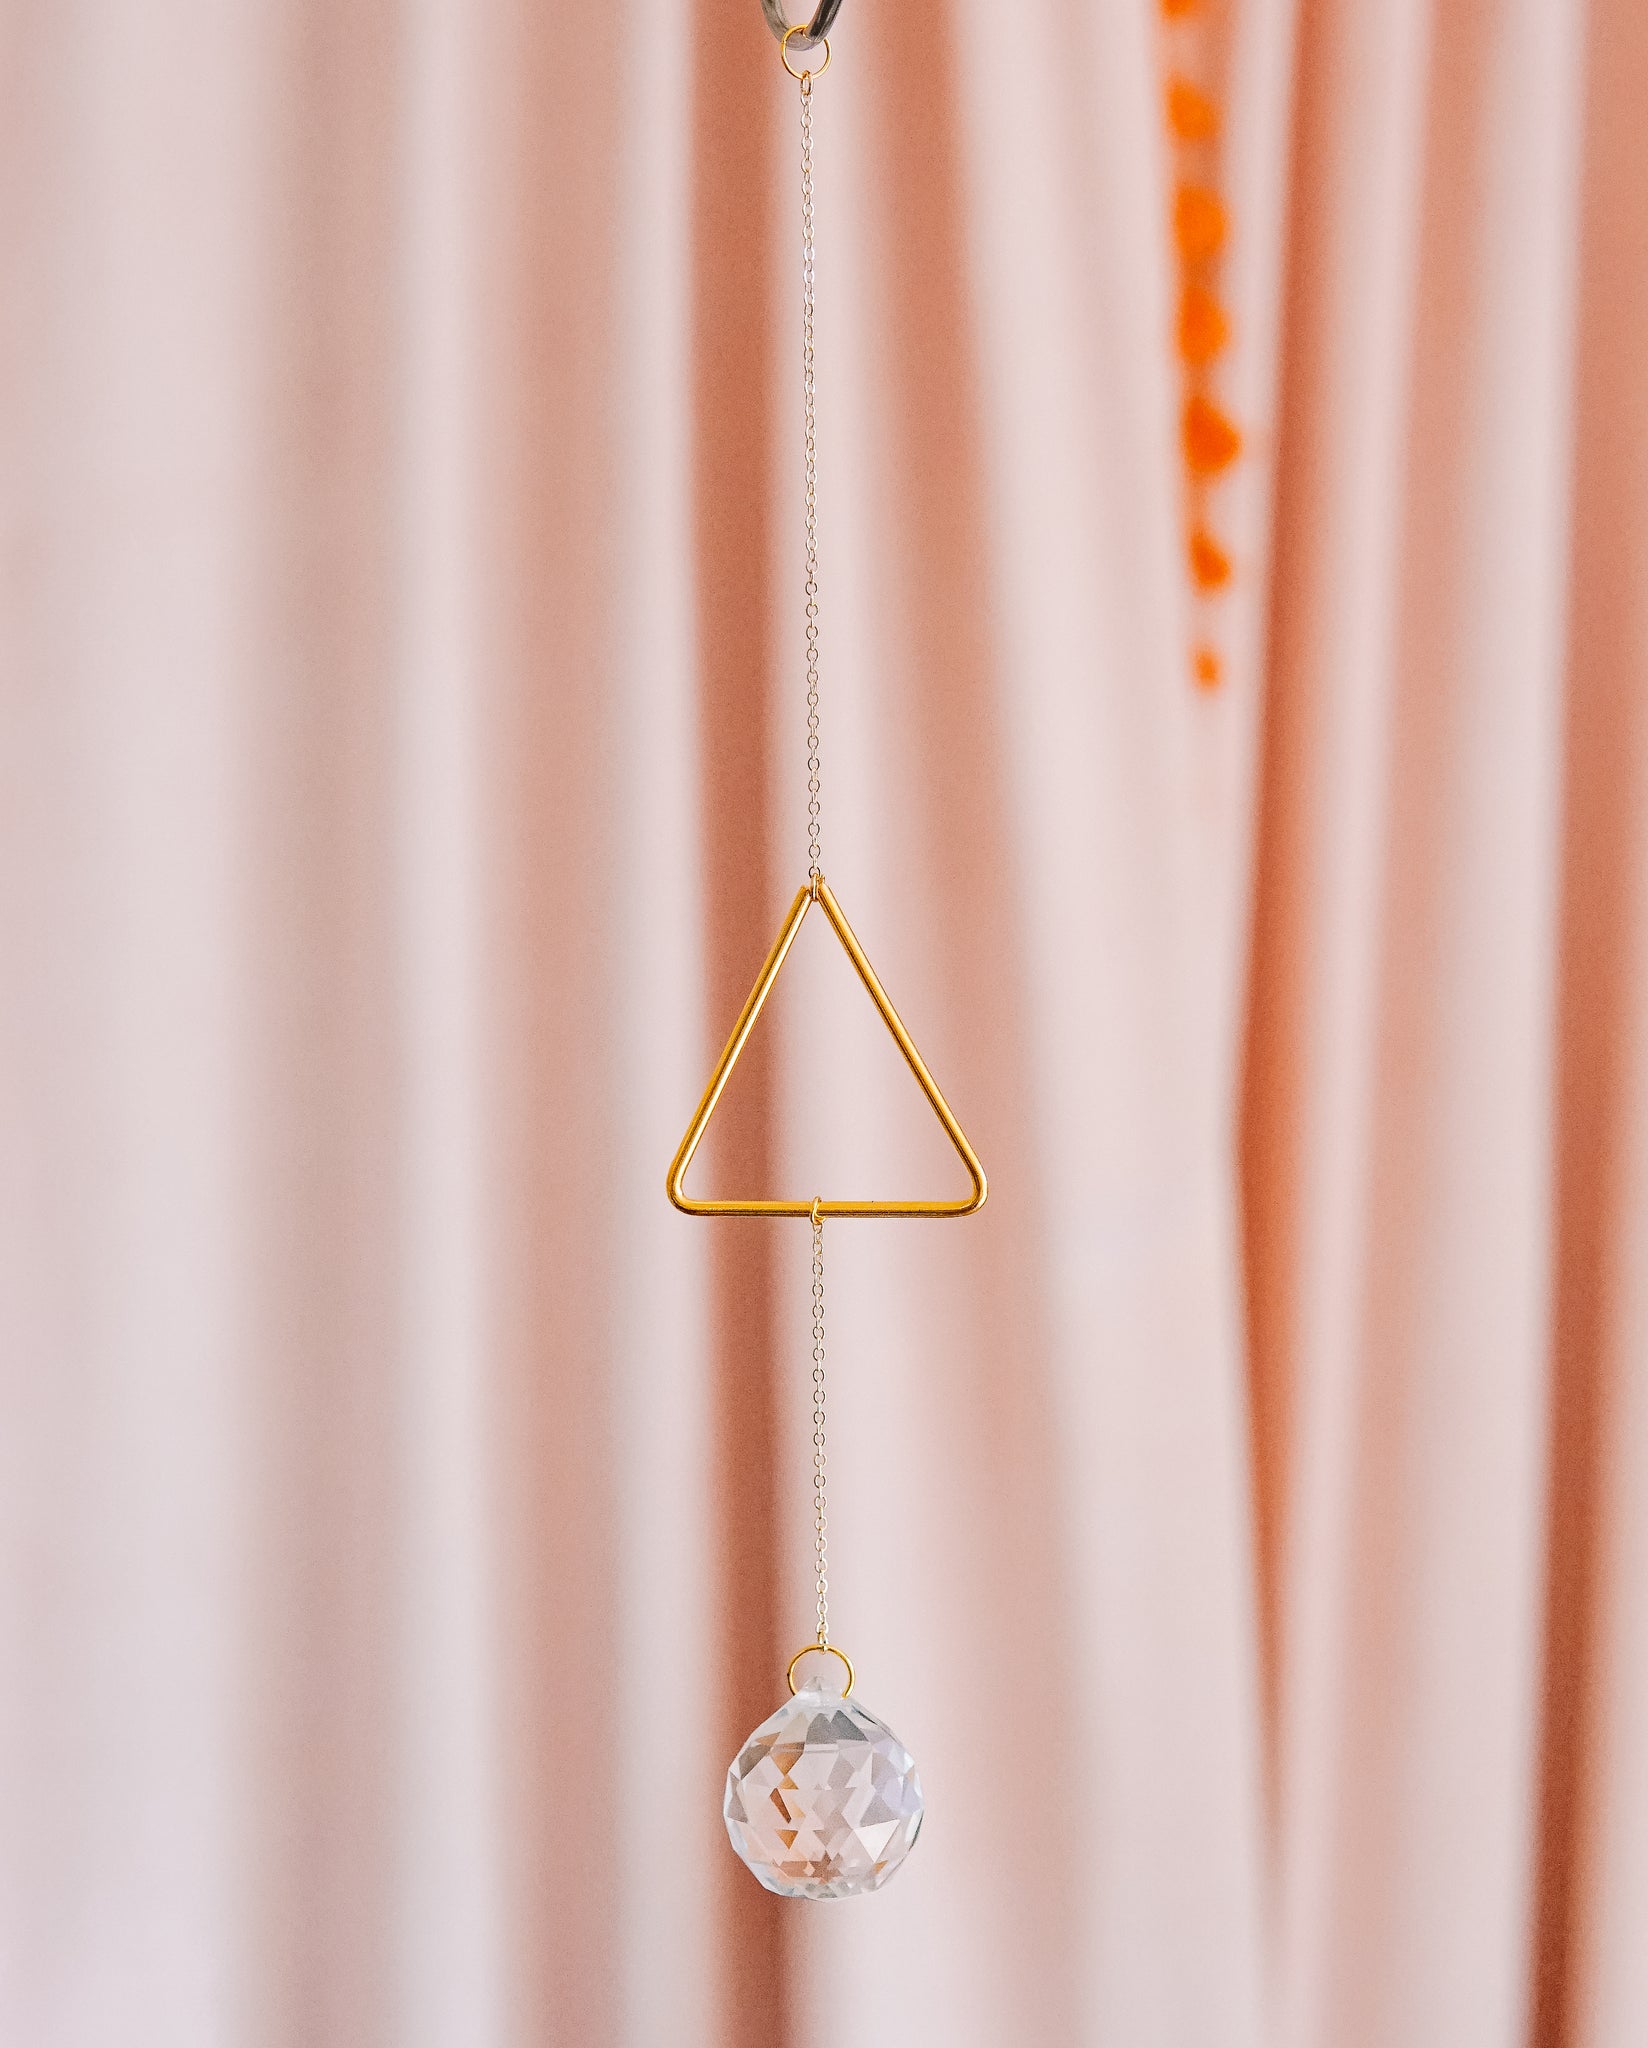 Mini Triangle Single Drip Prism Rainbow-Maker